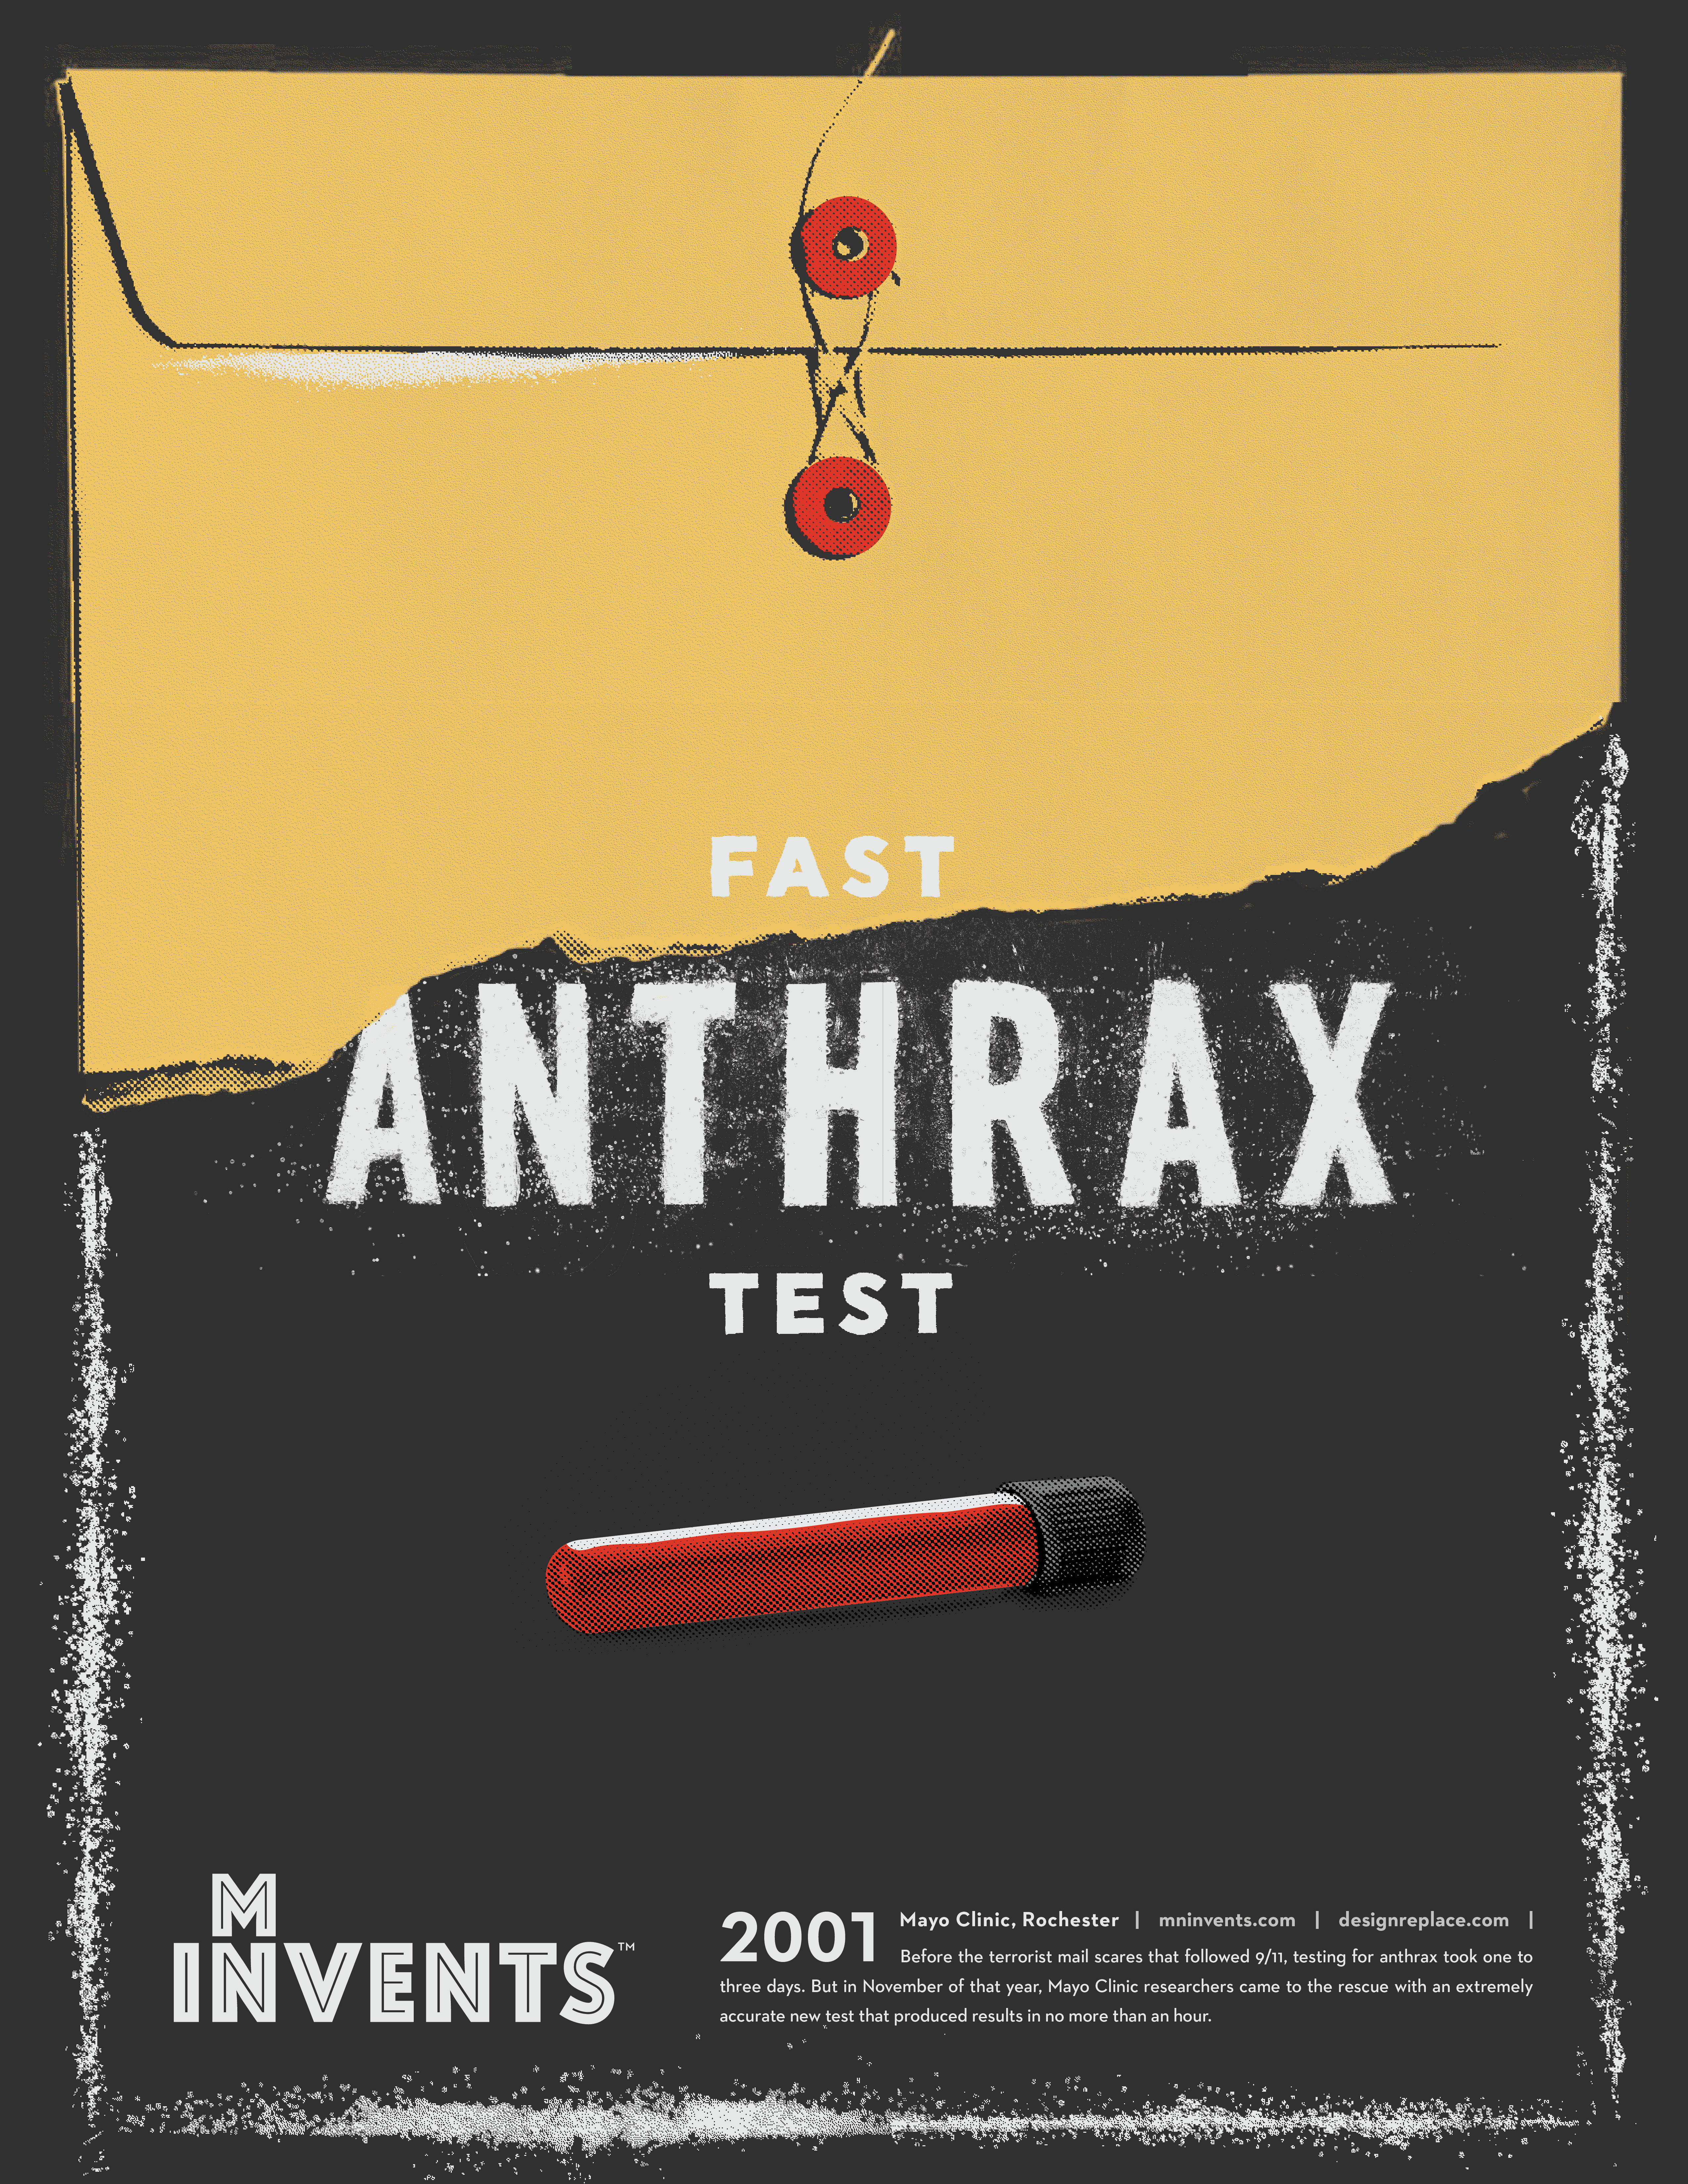 Fast Anthrax Test